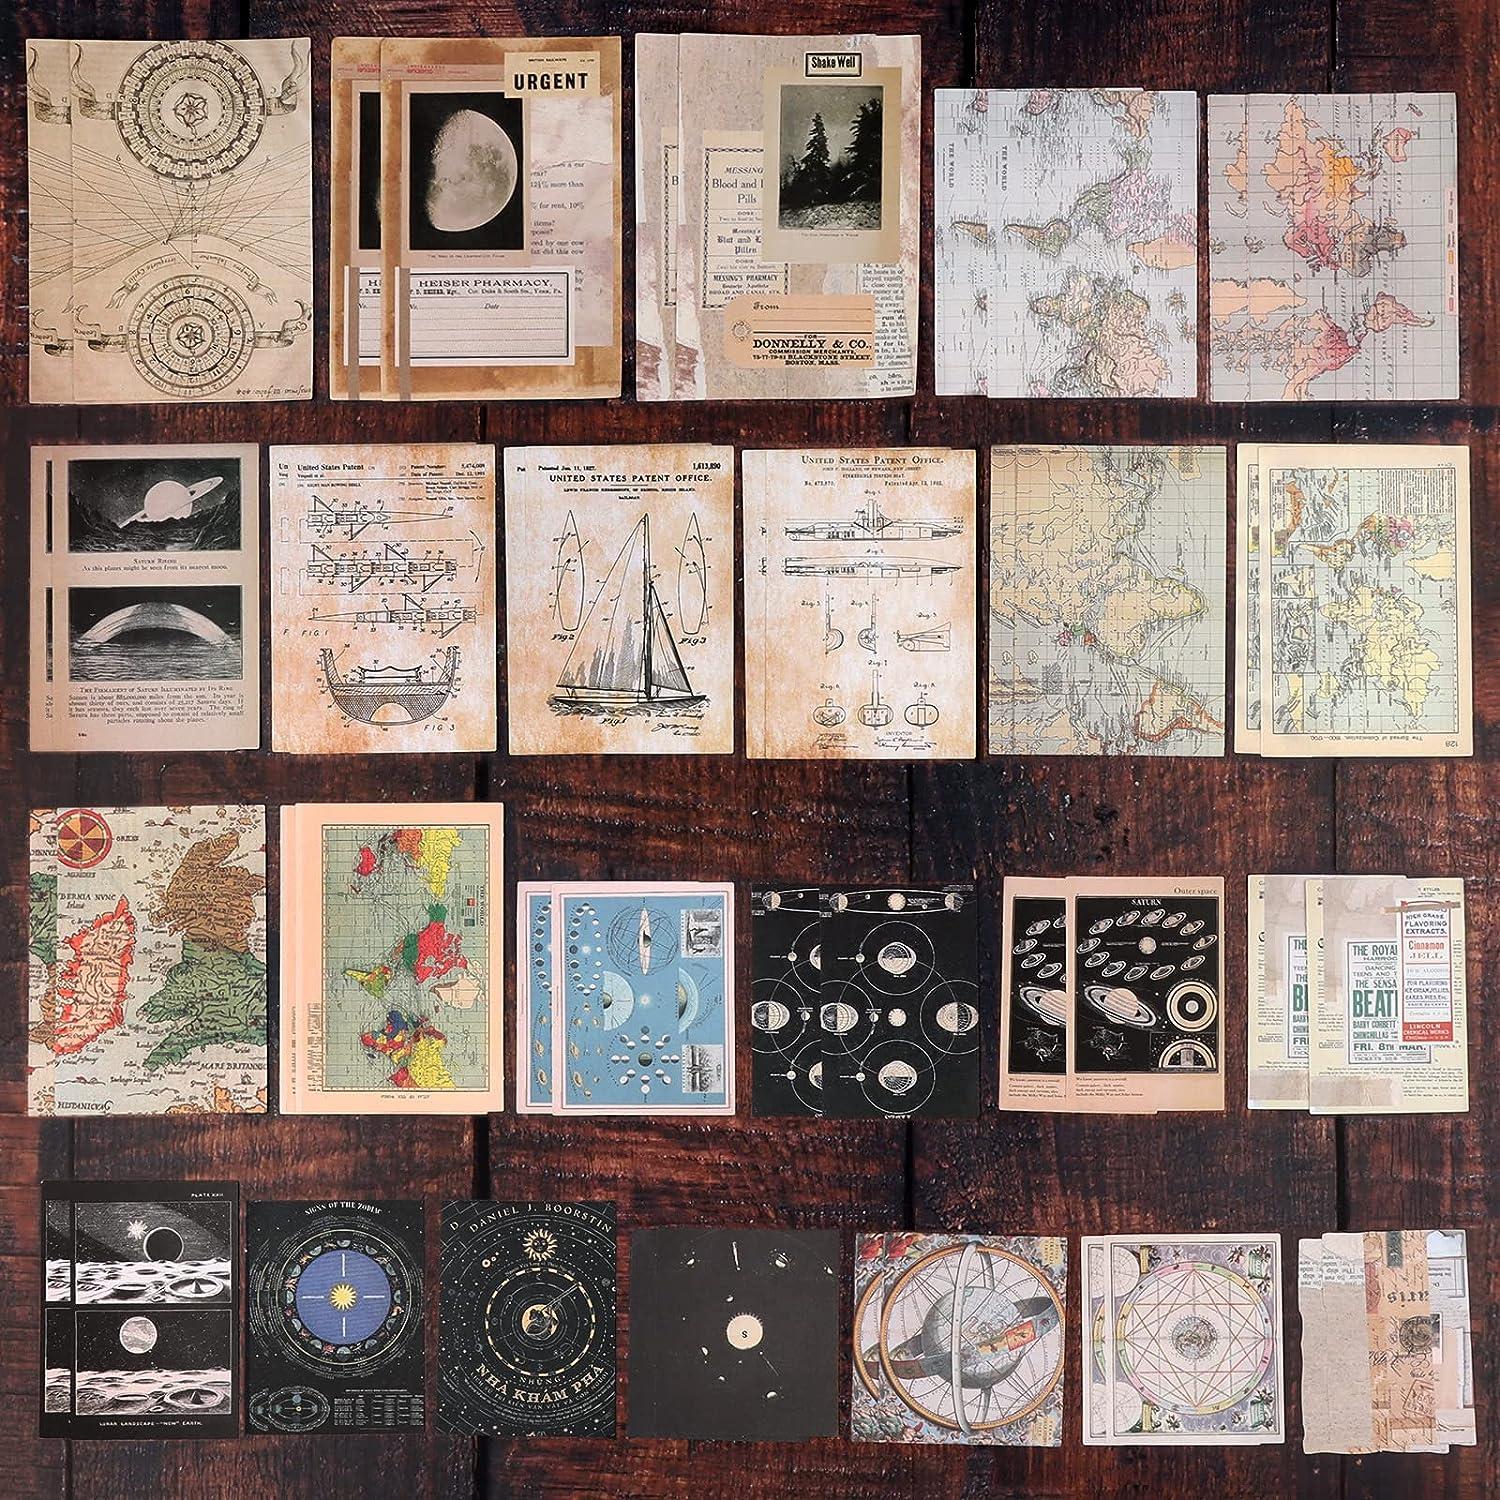  200Pcs Vintage Scrapbook Stickers, Aesthetic Junk Journal  Stamping Supplies Kit, Scrapbooking Ephemera Washi Paper for Bullet  Journaling Planners Diary Collage : Arts, Crafts & Sewing